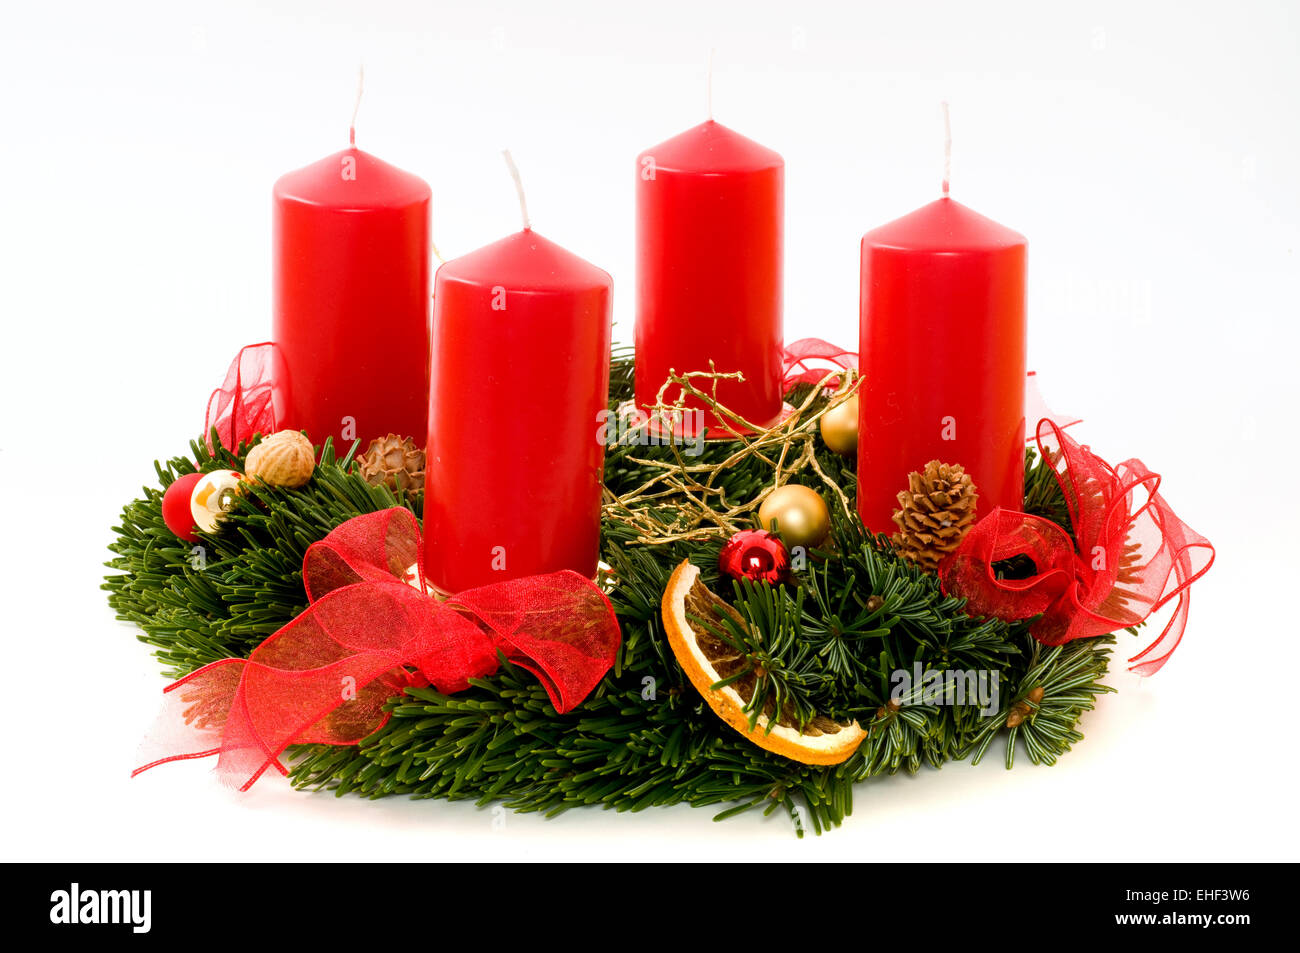 Adventskranz / Advent wreath Stock Photo - Alamy